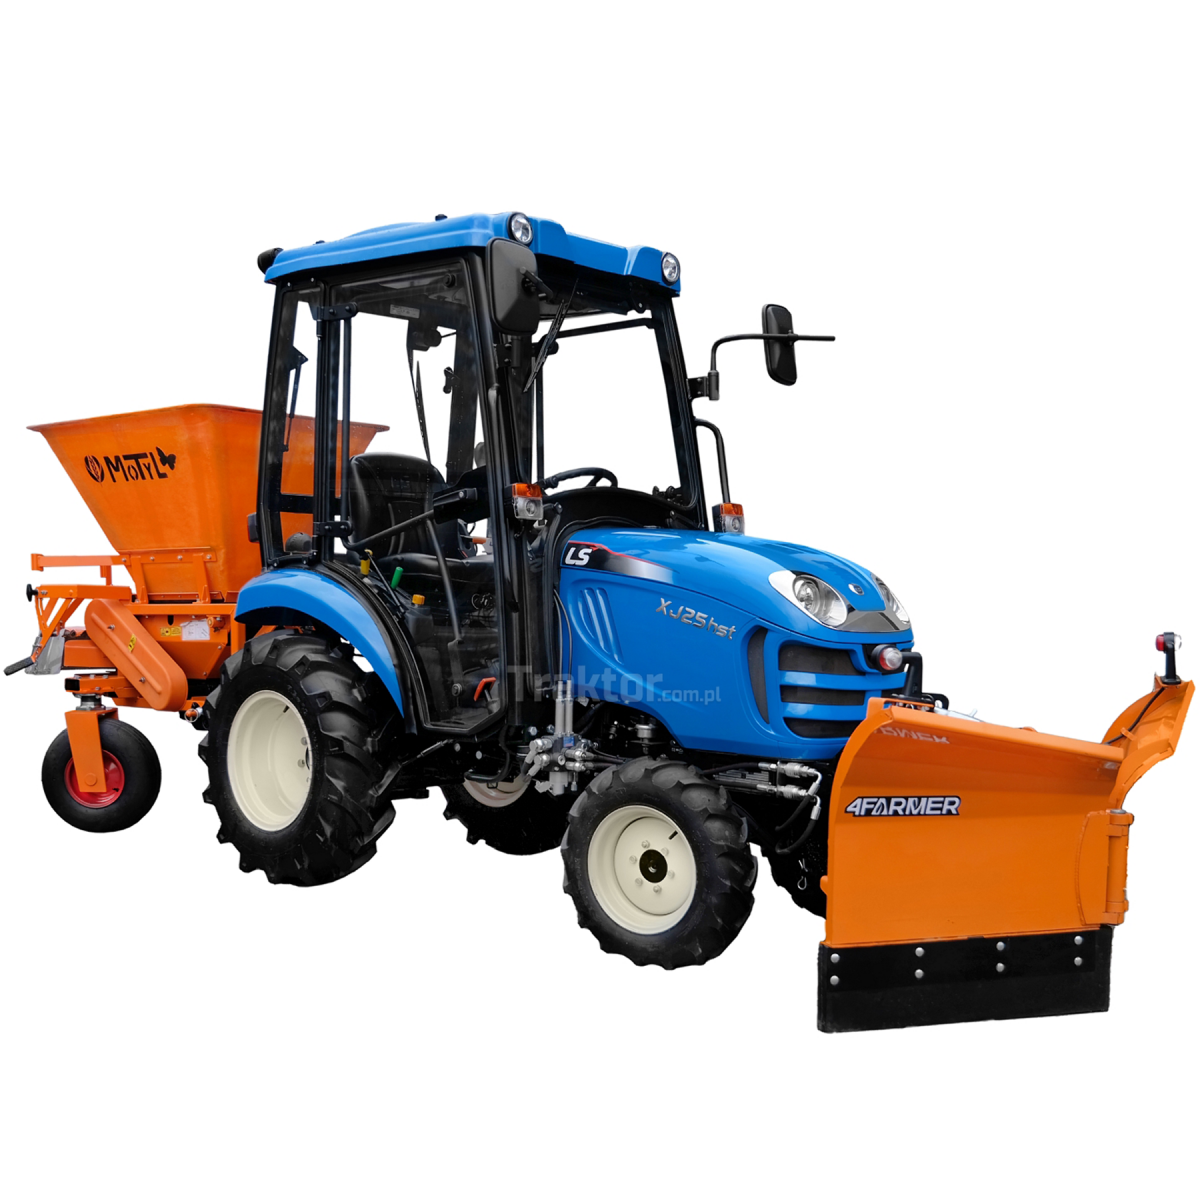 LS Tractor XJ25 HST 4x4 - 24.4 HP / CAB + Vario arrow snow plow 150 cm, hydraulic 4FARMER + Motyl spreader